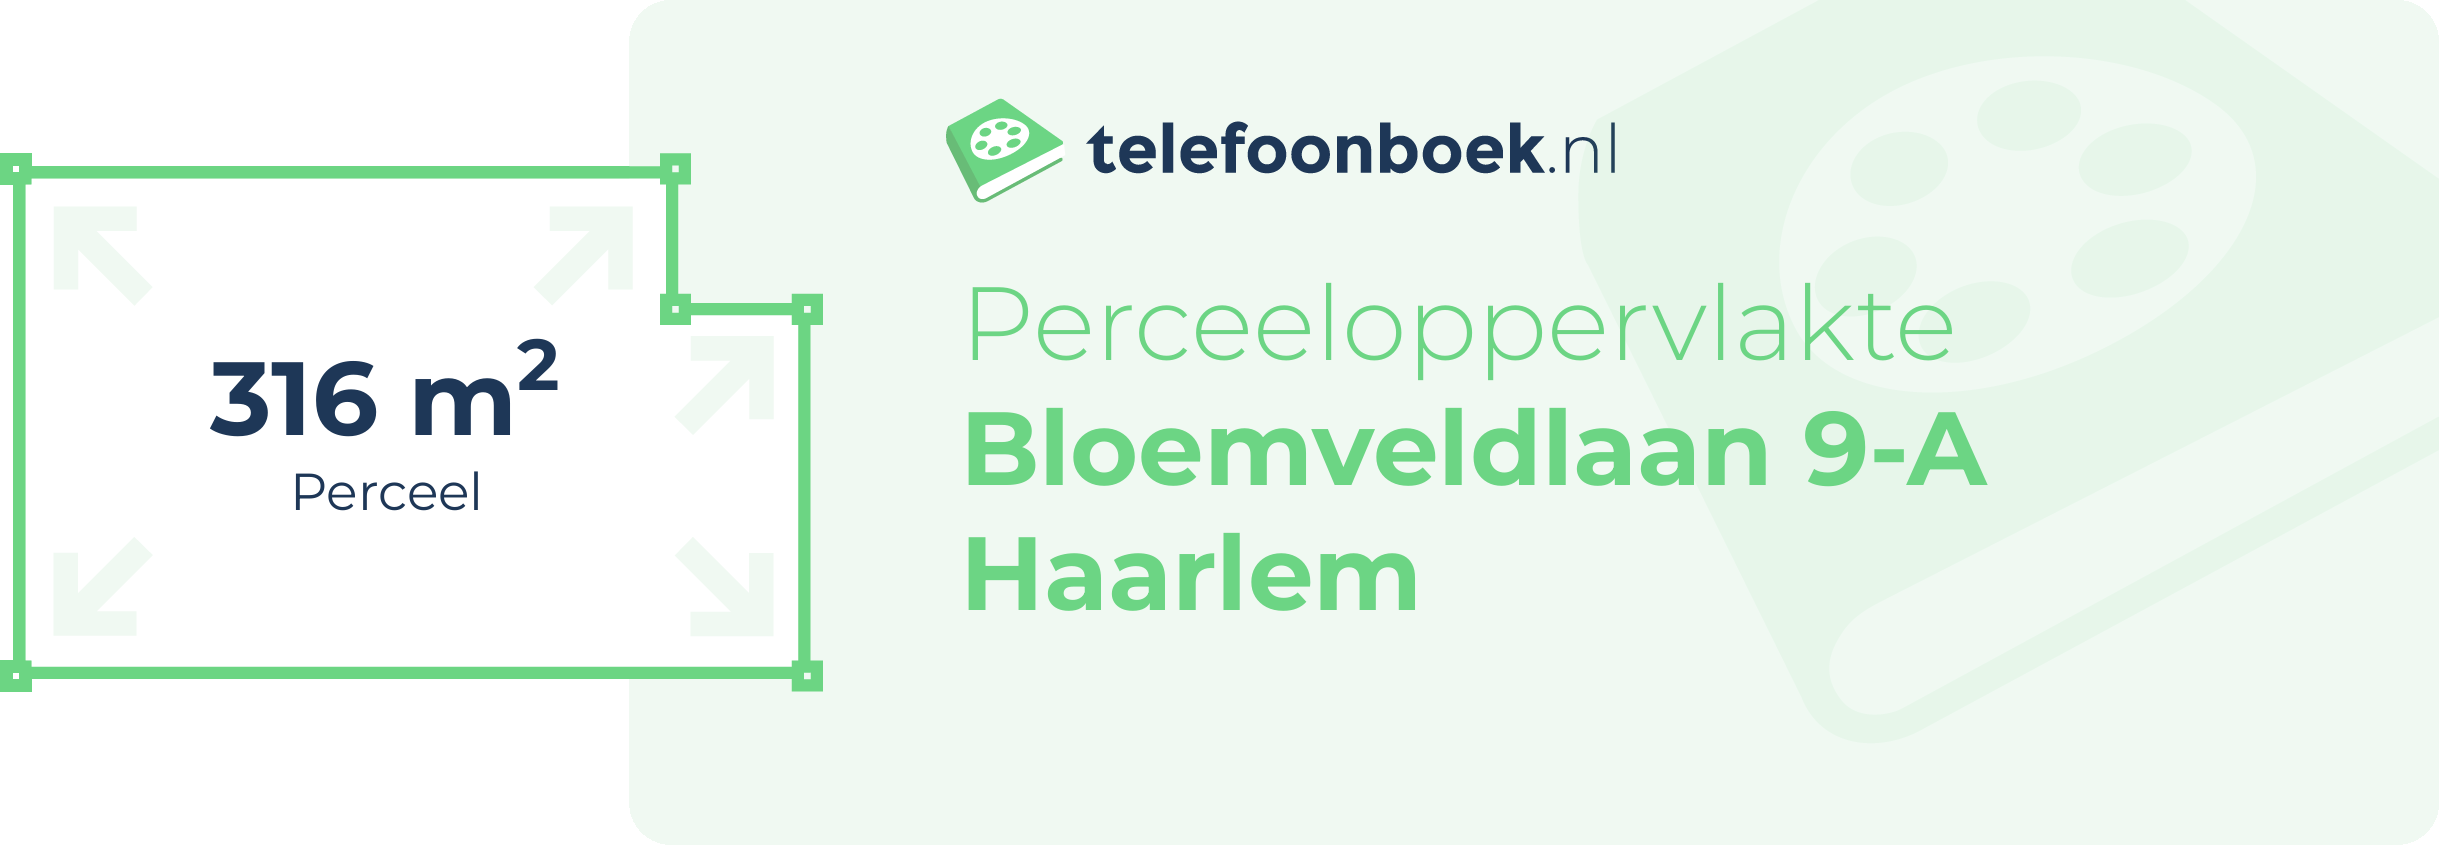 Perceeloppervlakte Bloemveldlaan 9-A Haarlem